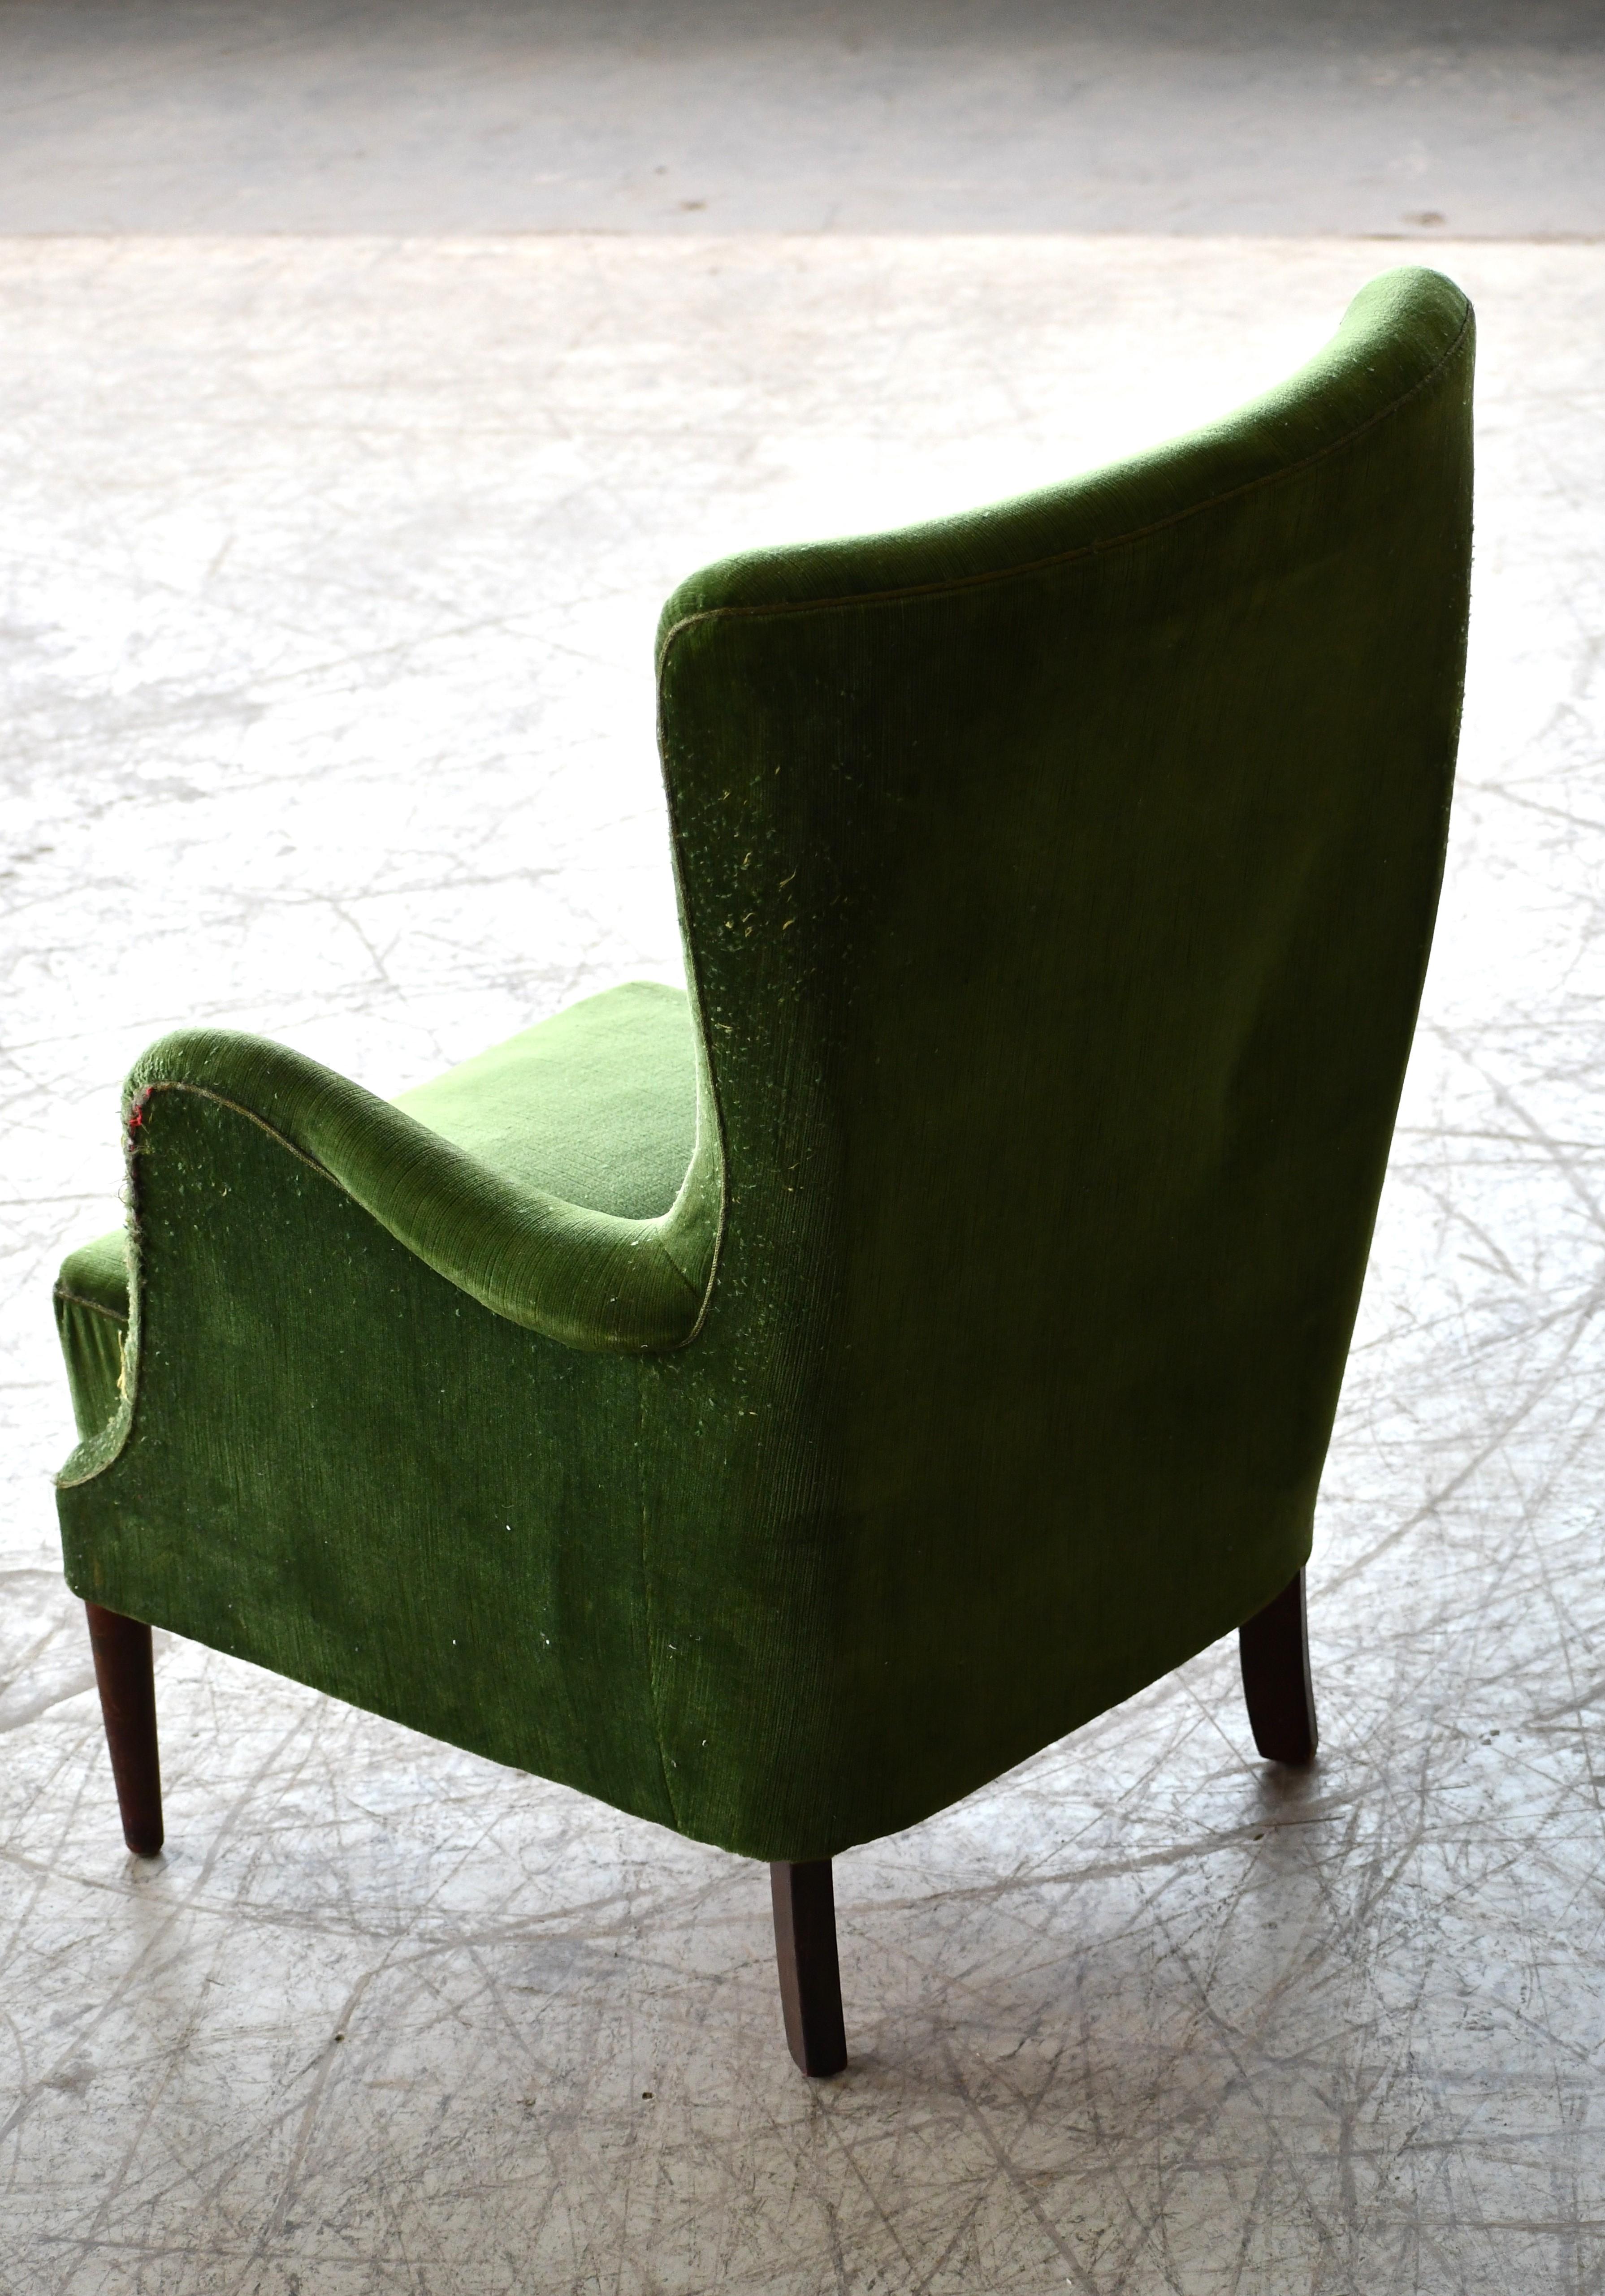 Peter Hvidt Orla Molgaard Classic Danish 1950s Lounge Chair For Sale 1